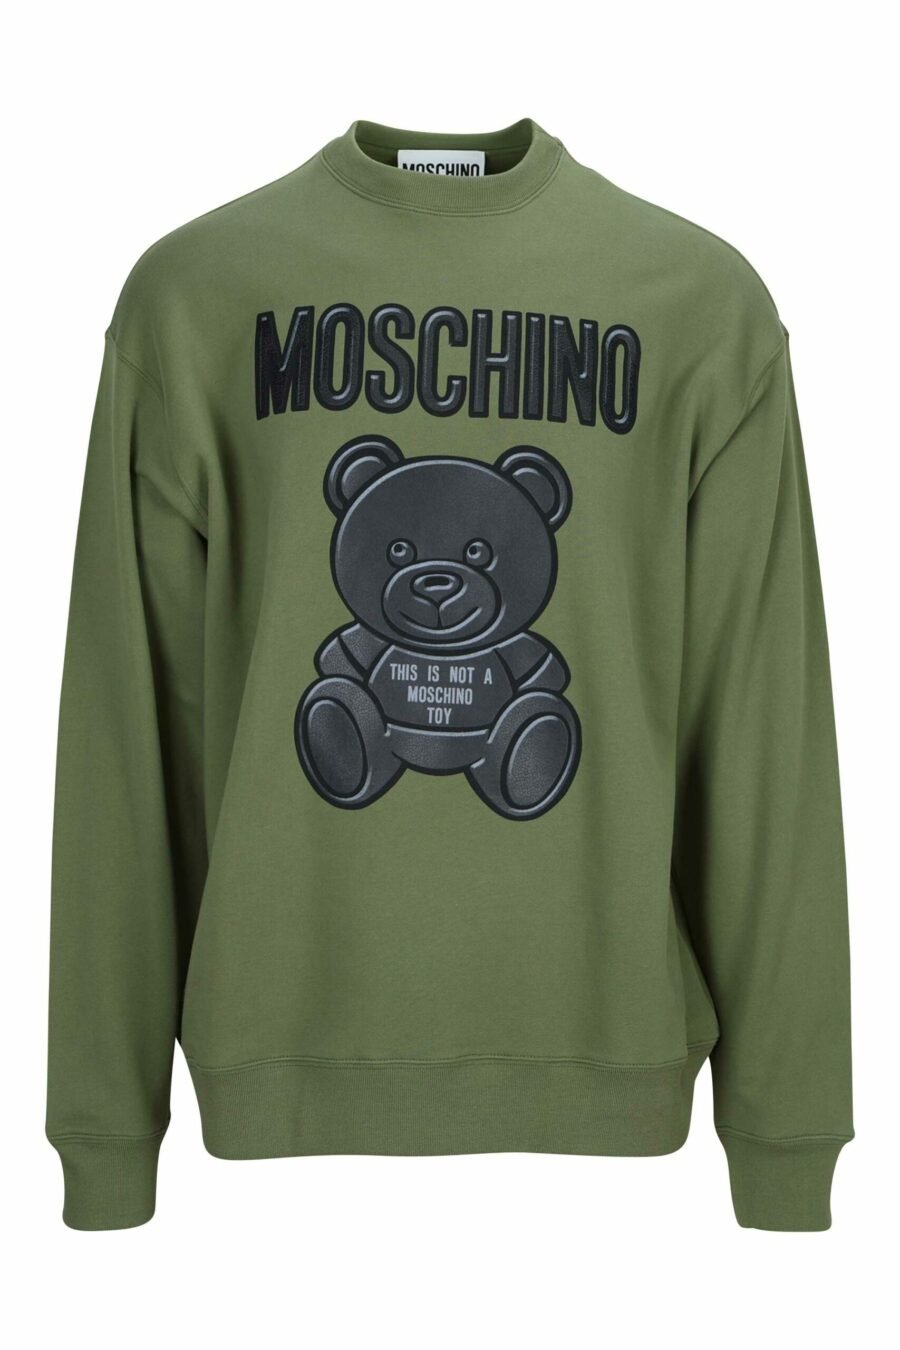 Sweat-shirt vert militaire avec maxilogo "teddy" noir - 889316852639 scaled